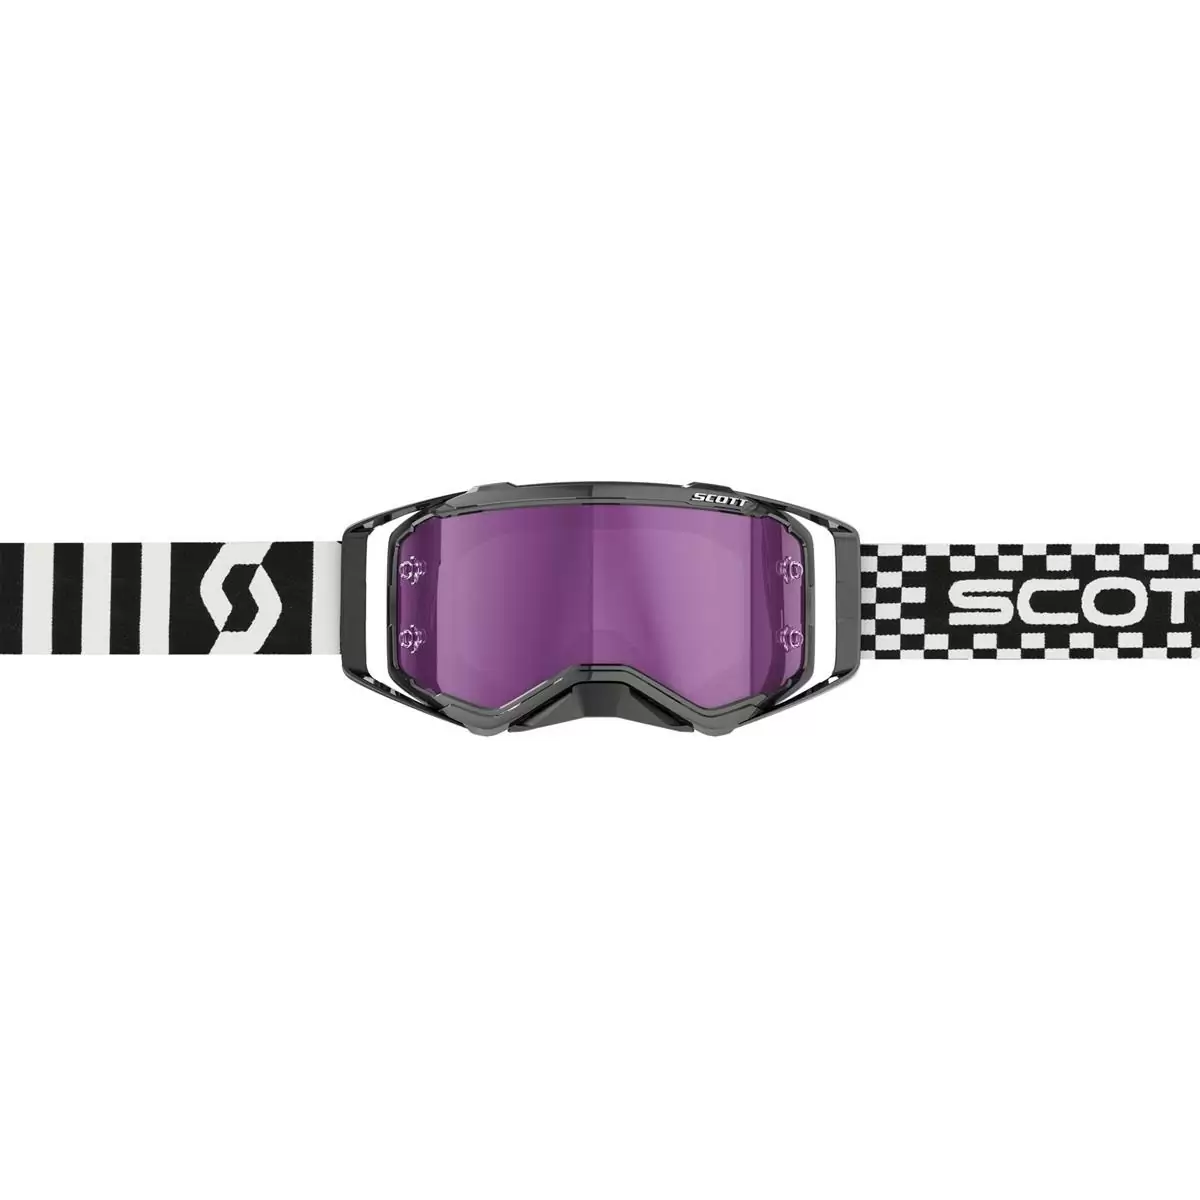 Prospect Mask White/Black With Chrome Works Purple Lens #1